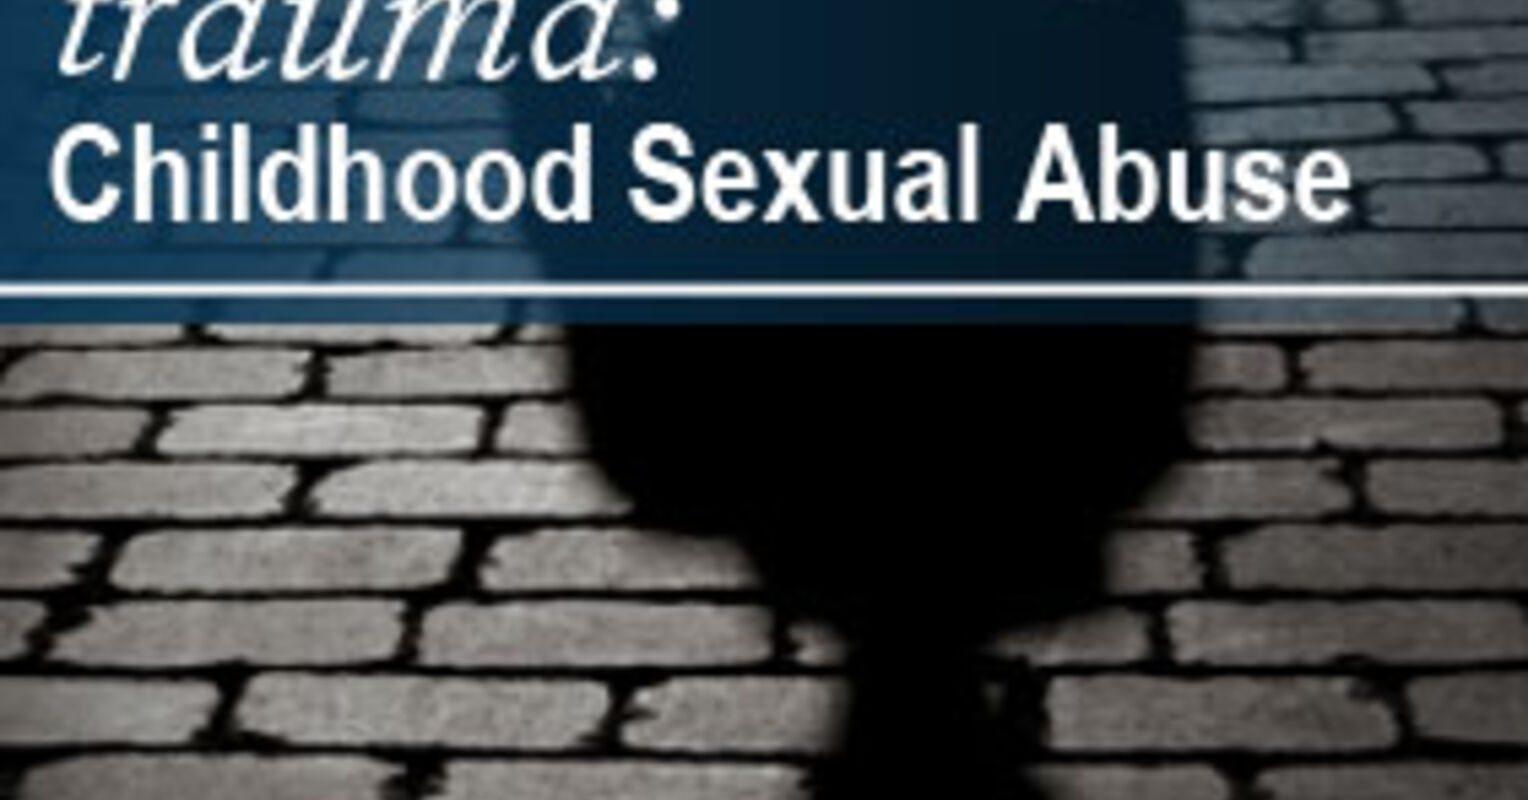 signs of childhood sexual trauma